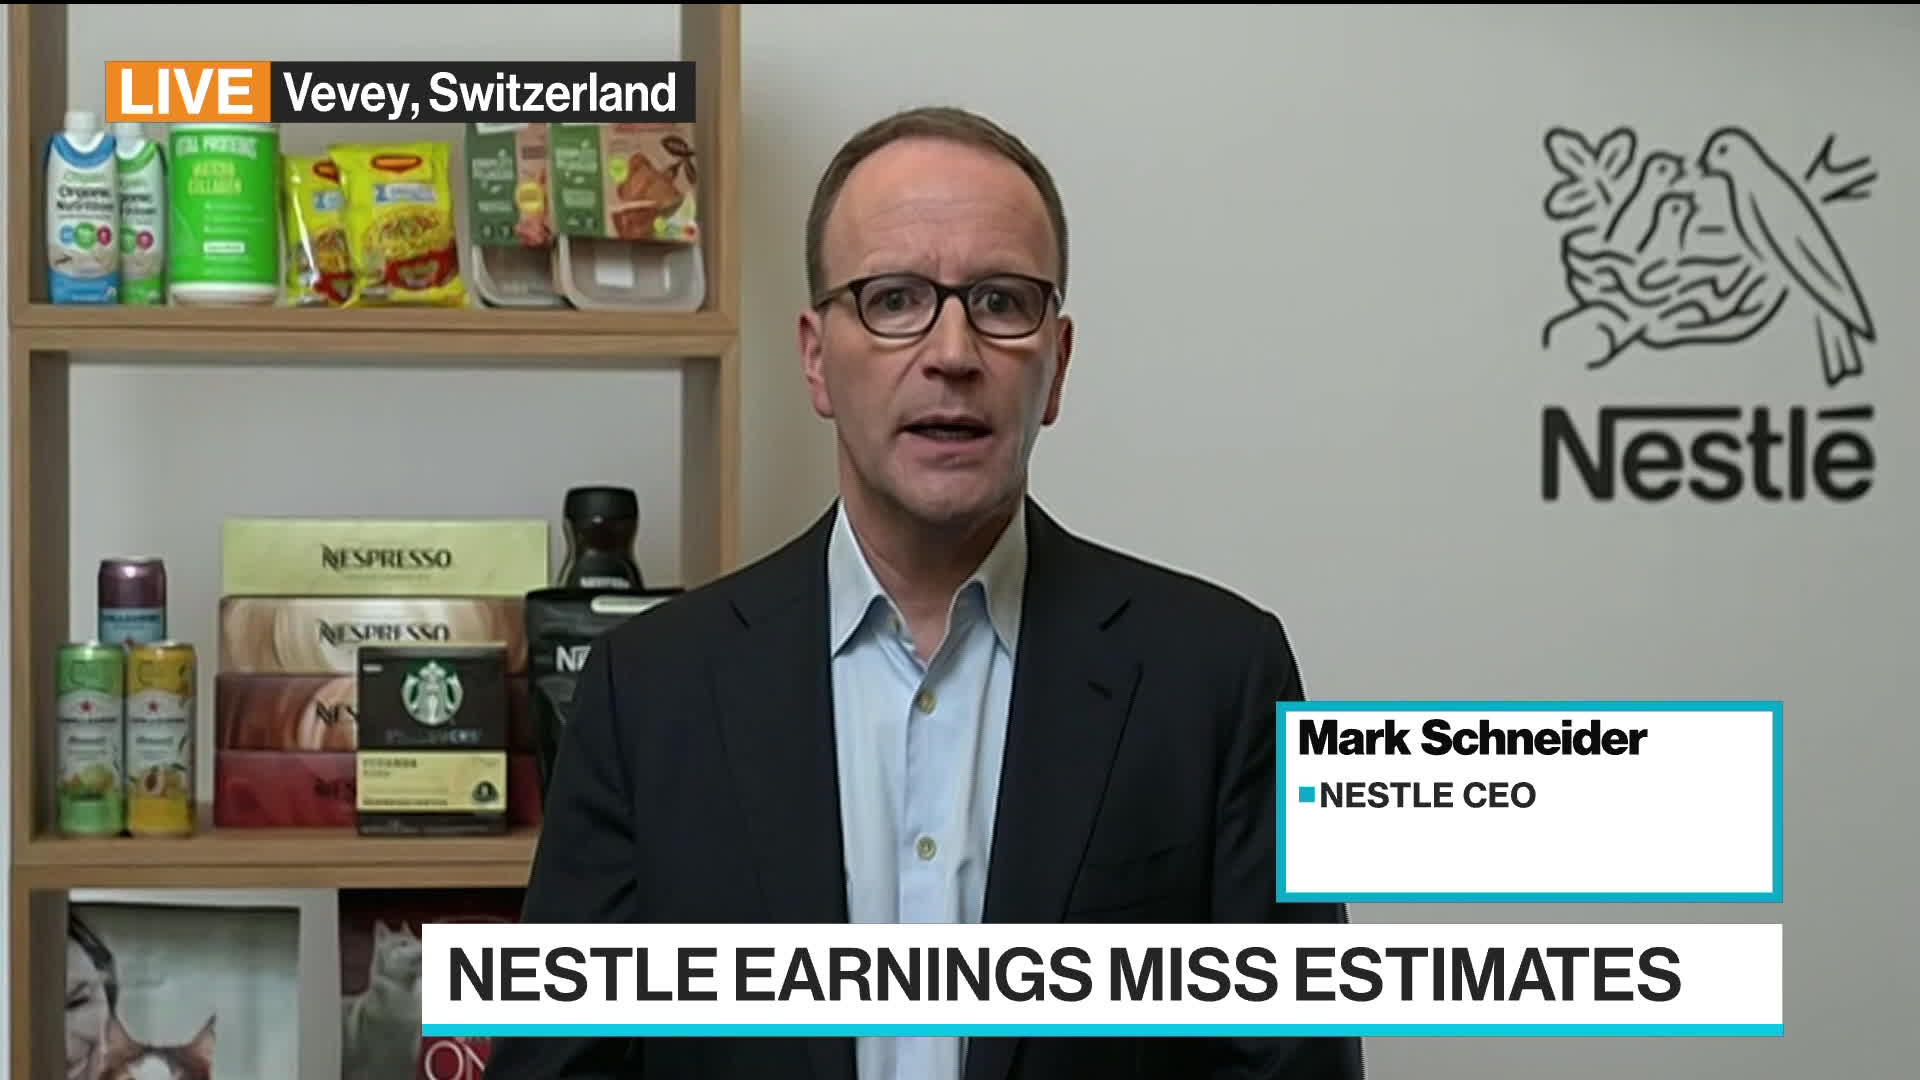 Nestlé - ¡Terminó el Hot Sale pero no las ofertas! Aprovechá